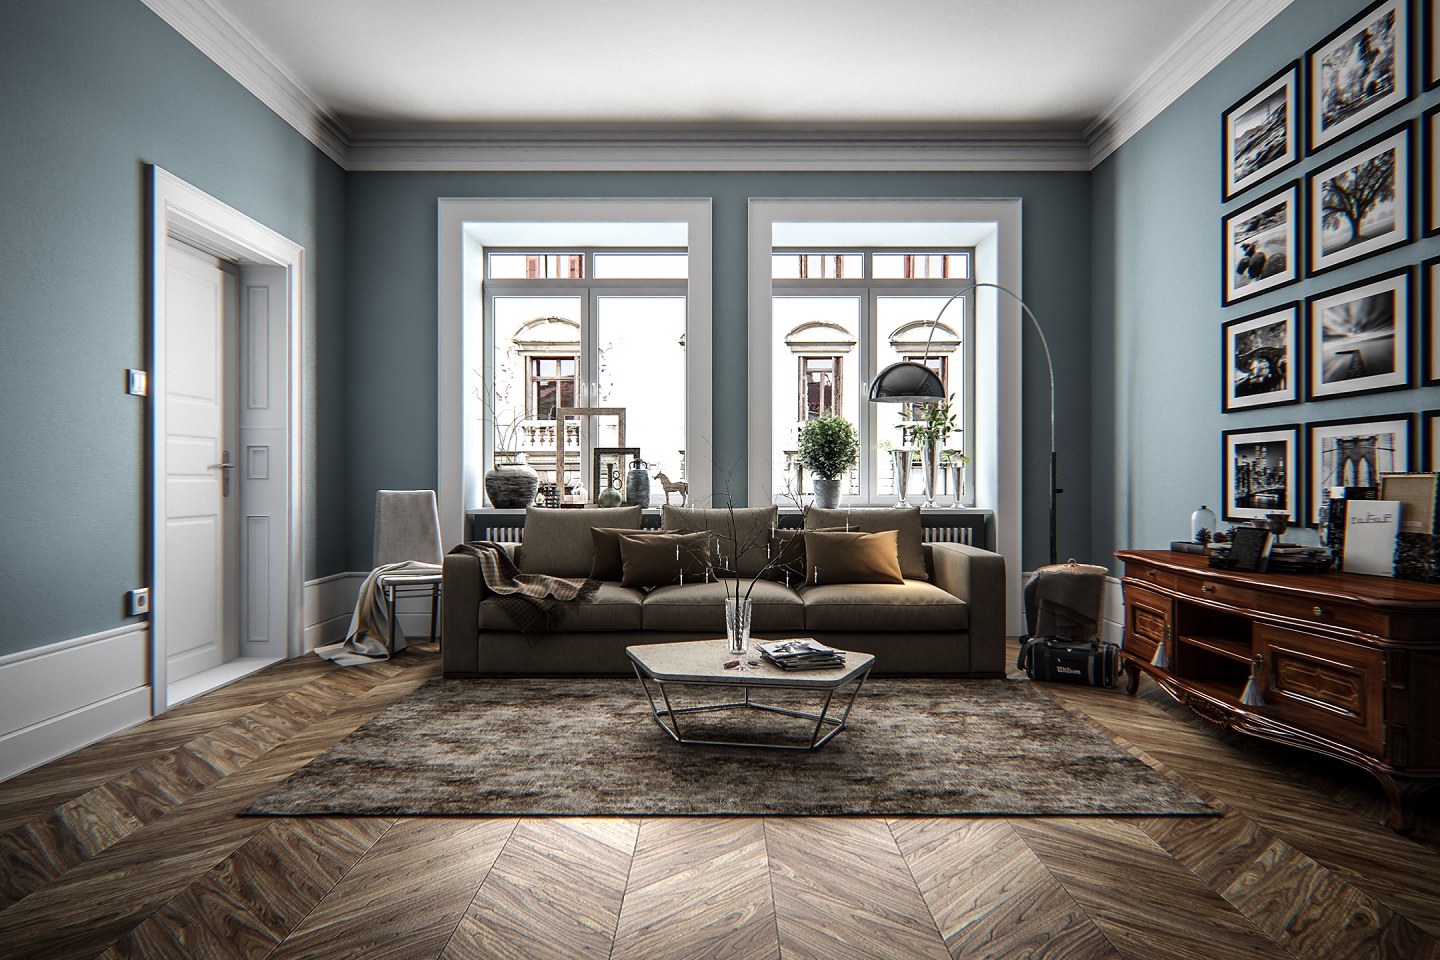 3D Archviz - Zeynep's Living Room - by Ali İhsan Değirmenci - #354